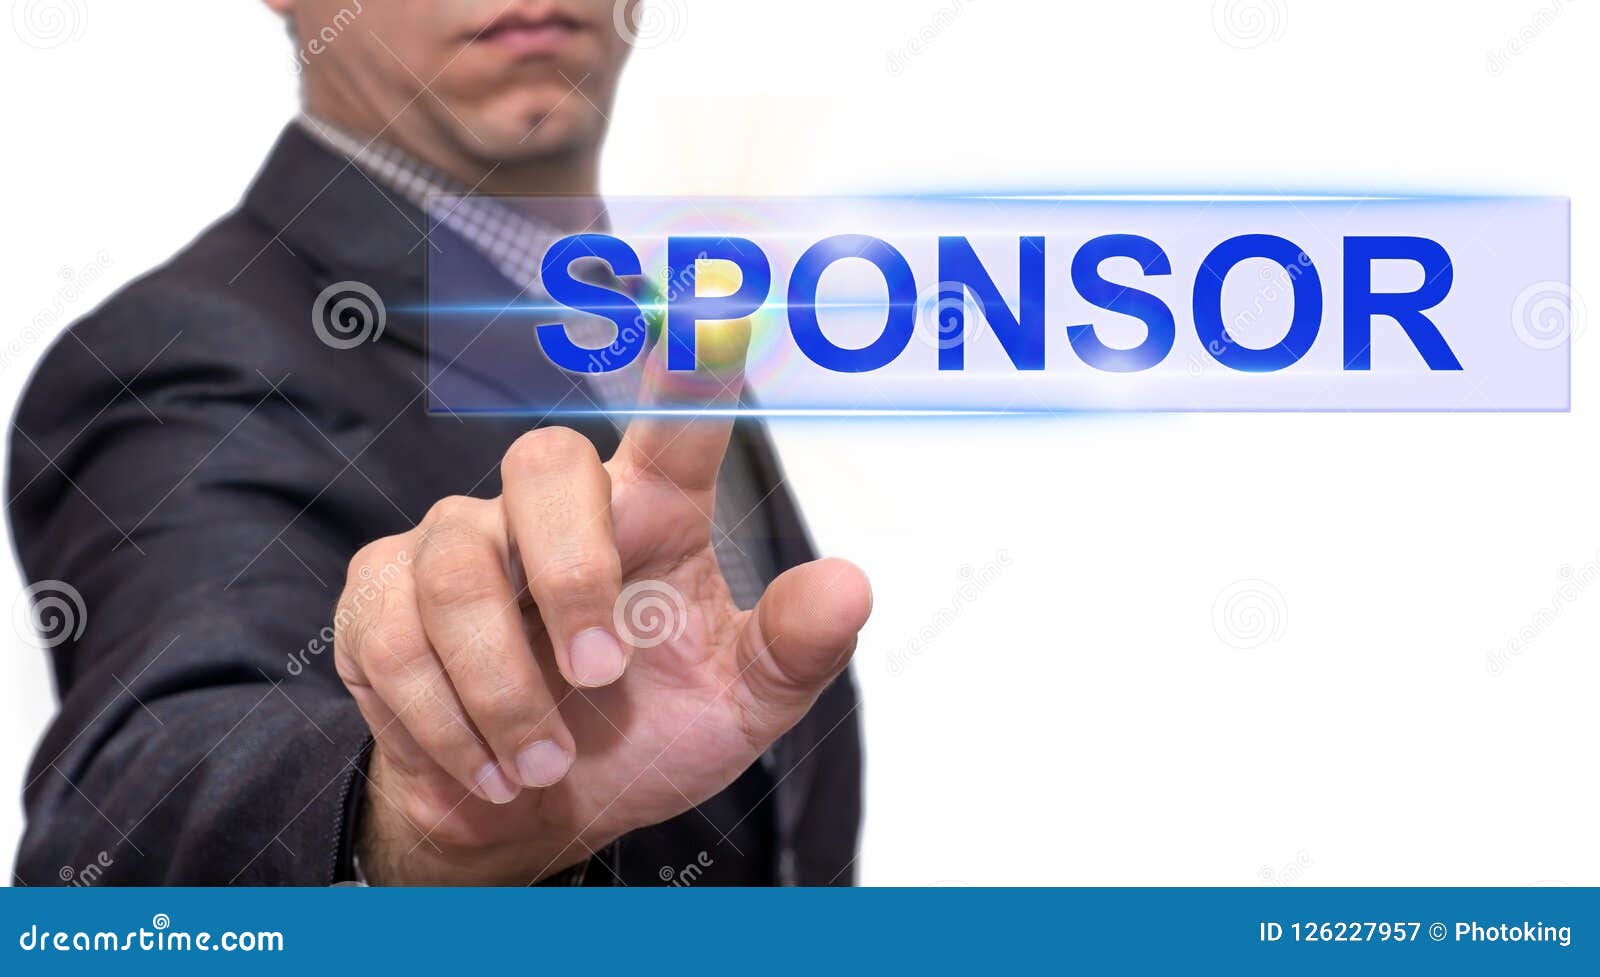 sponsor text with businessman